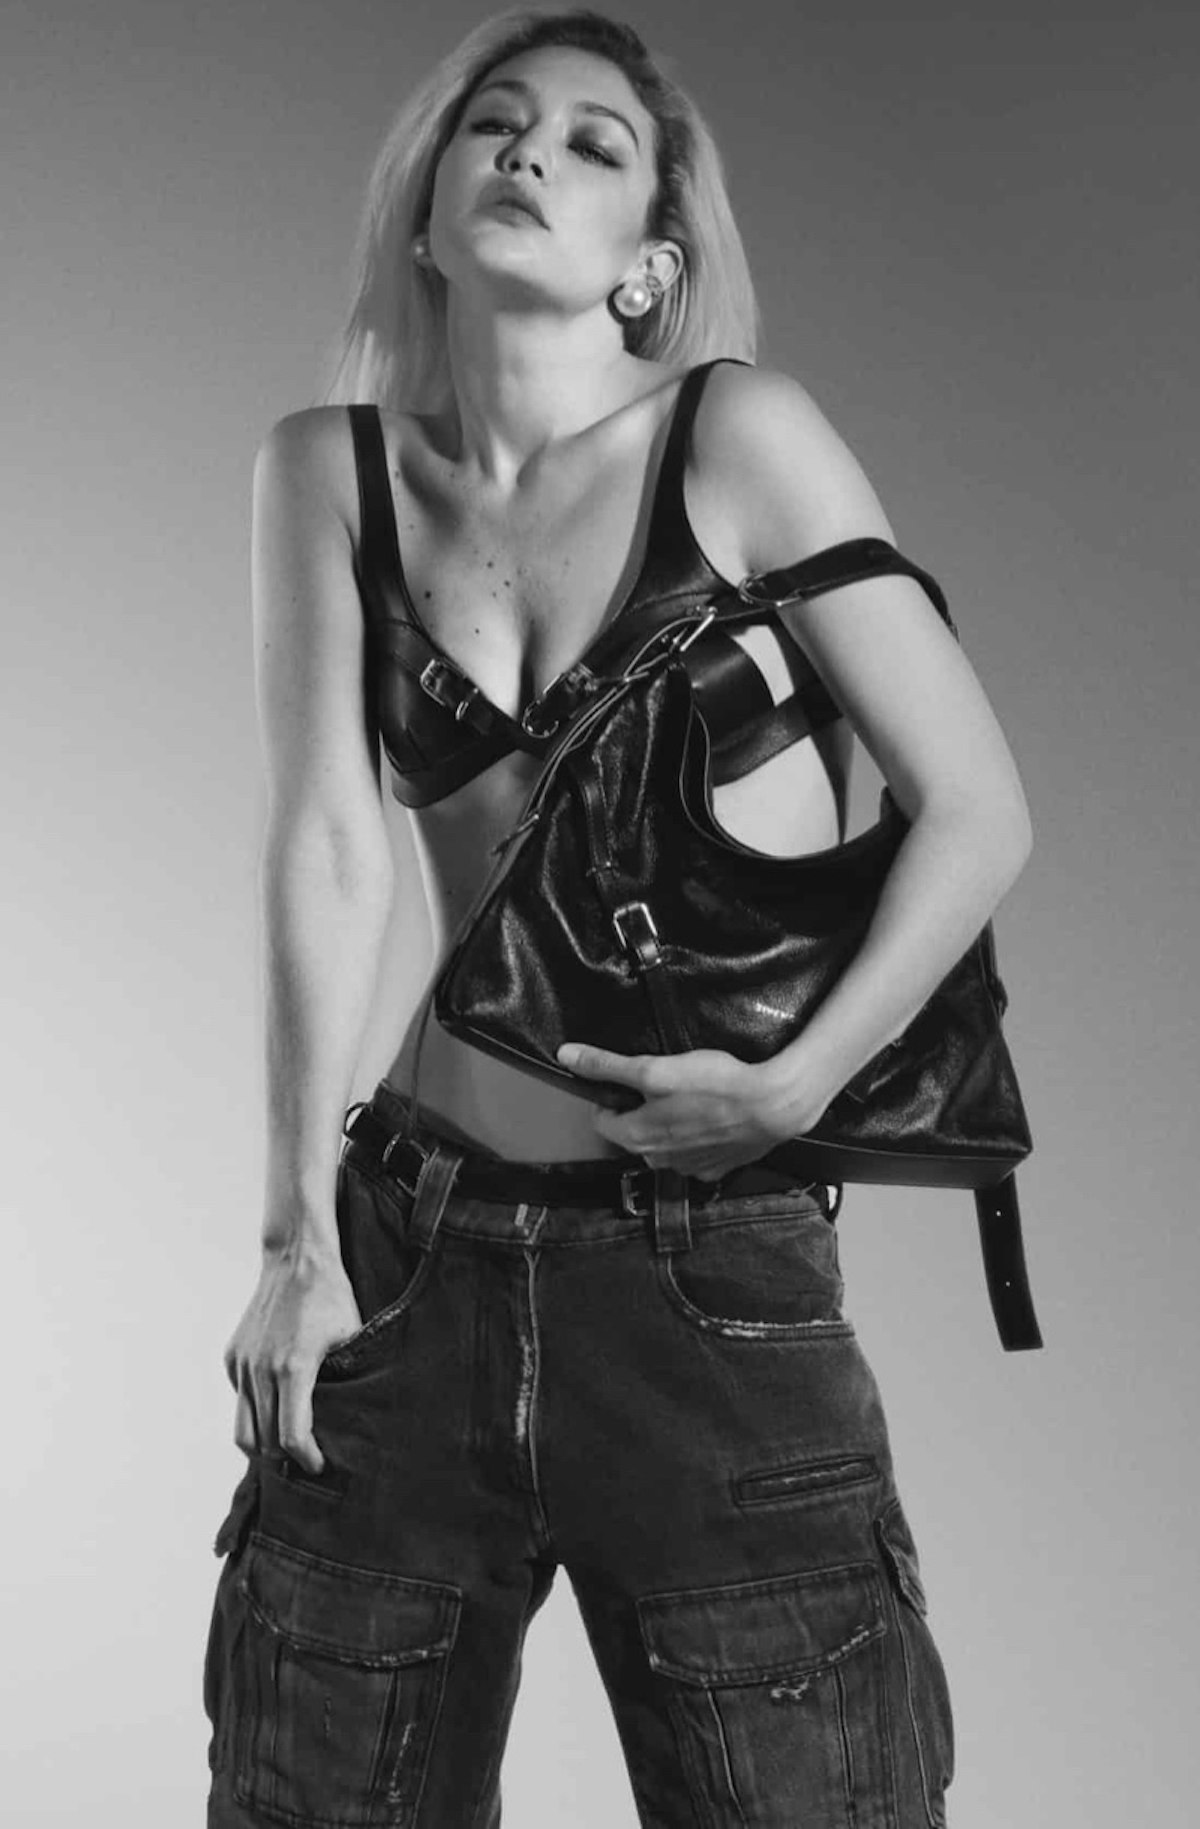 Gigi Hadid Displays Extravagant Handbag Collection: Pic